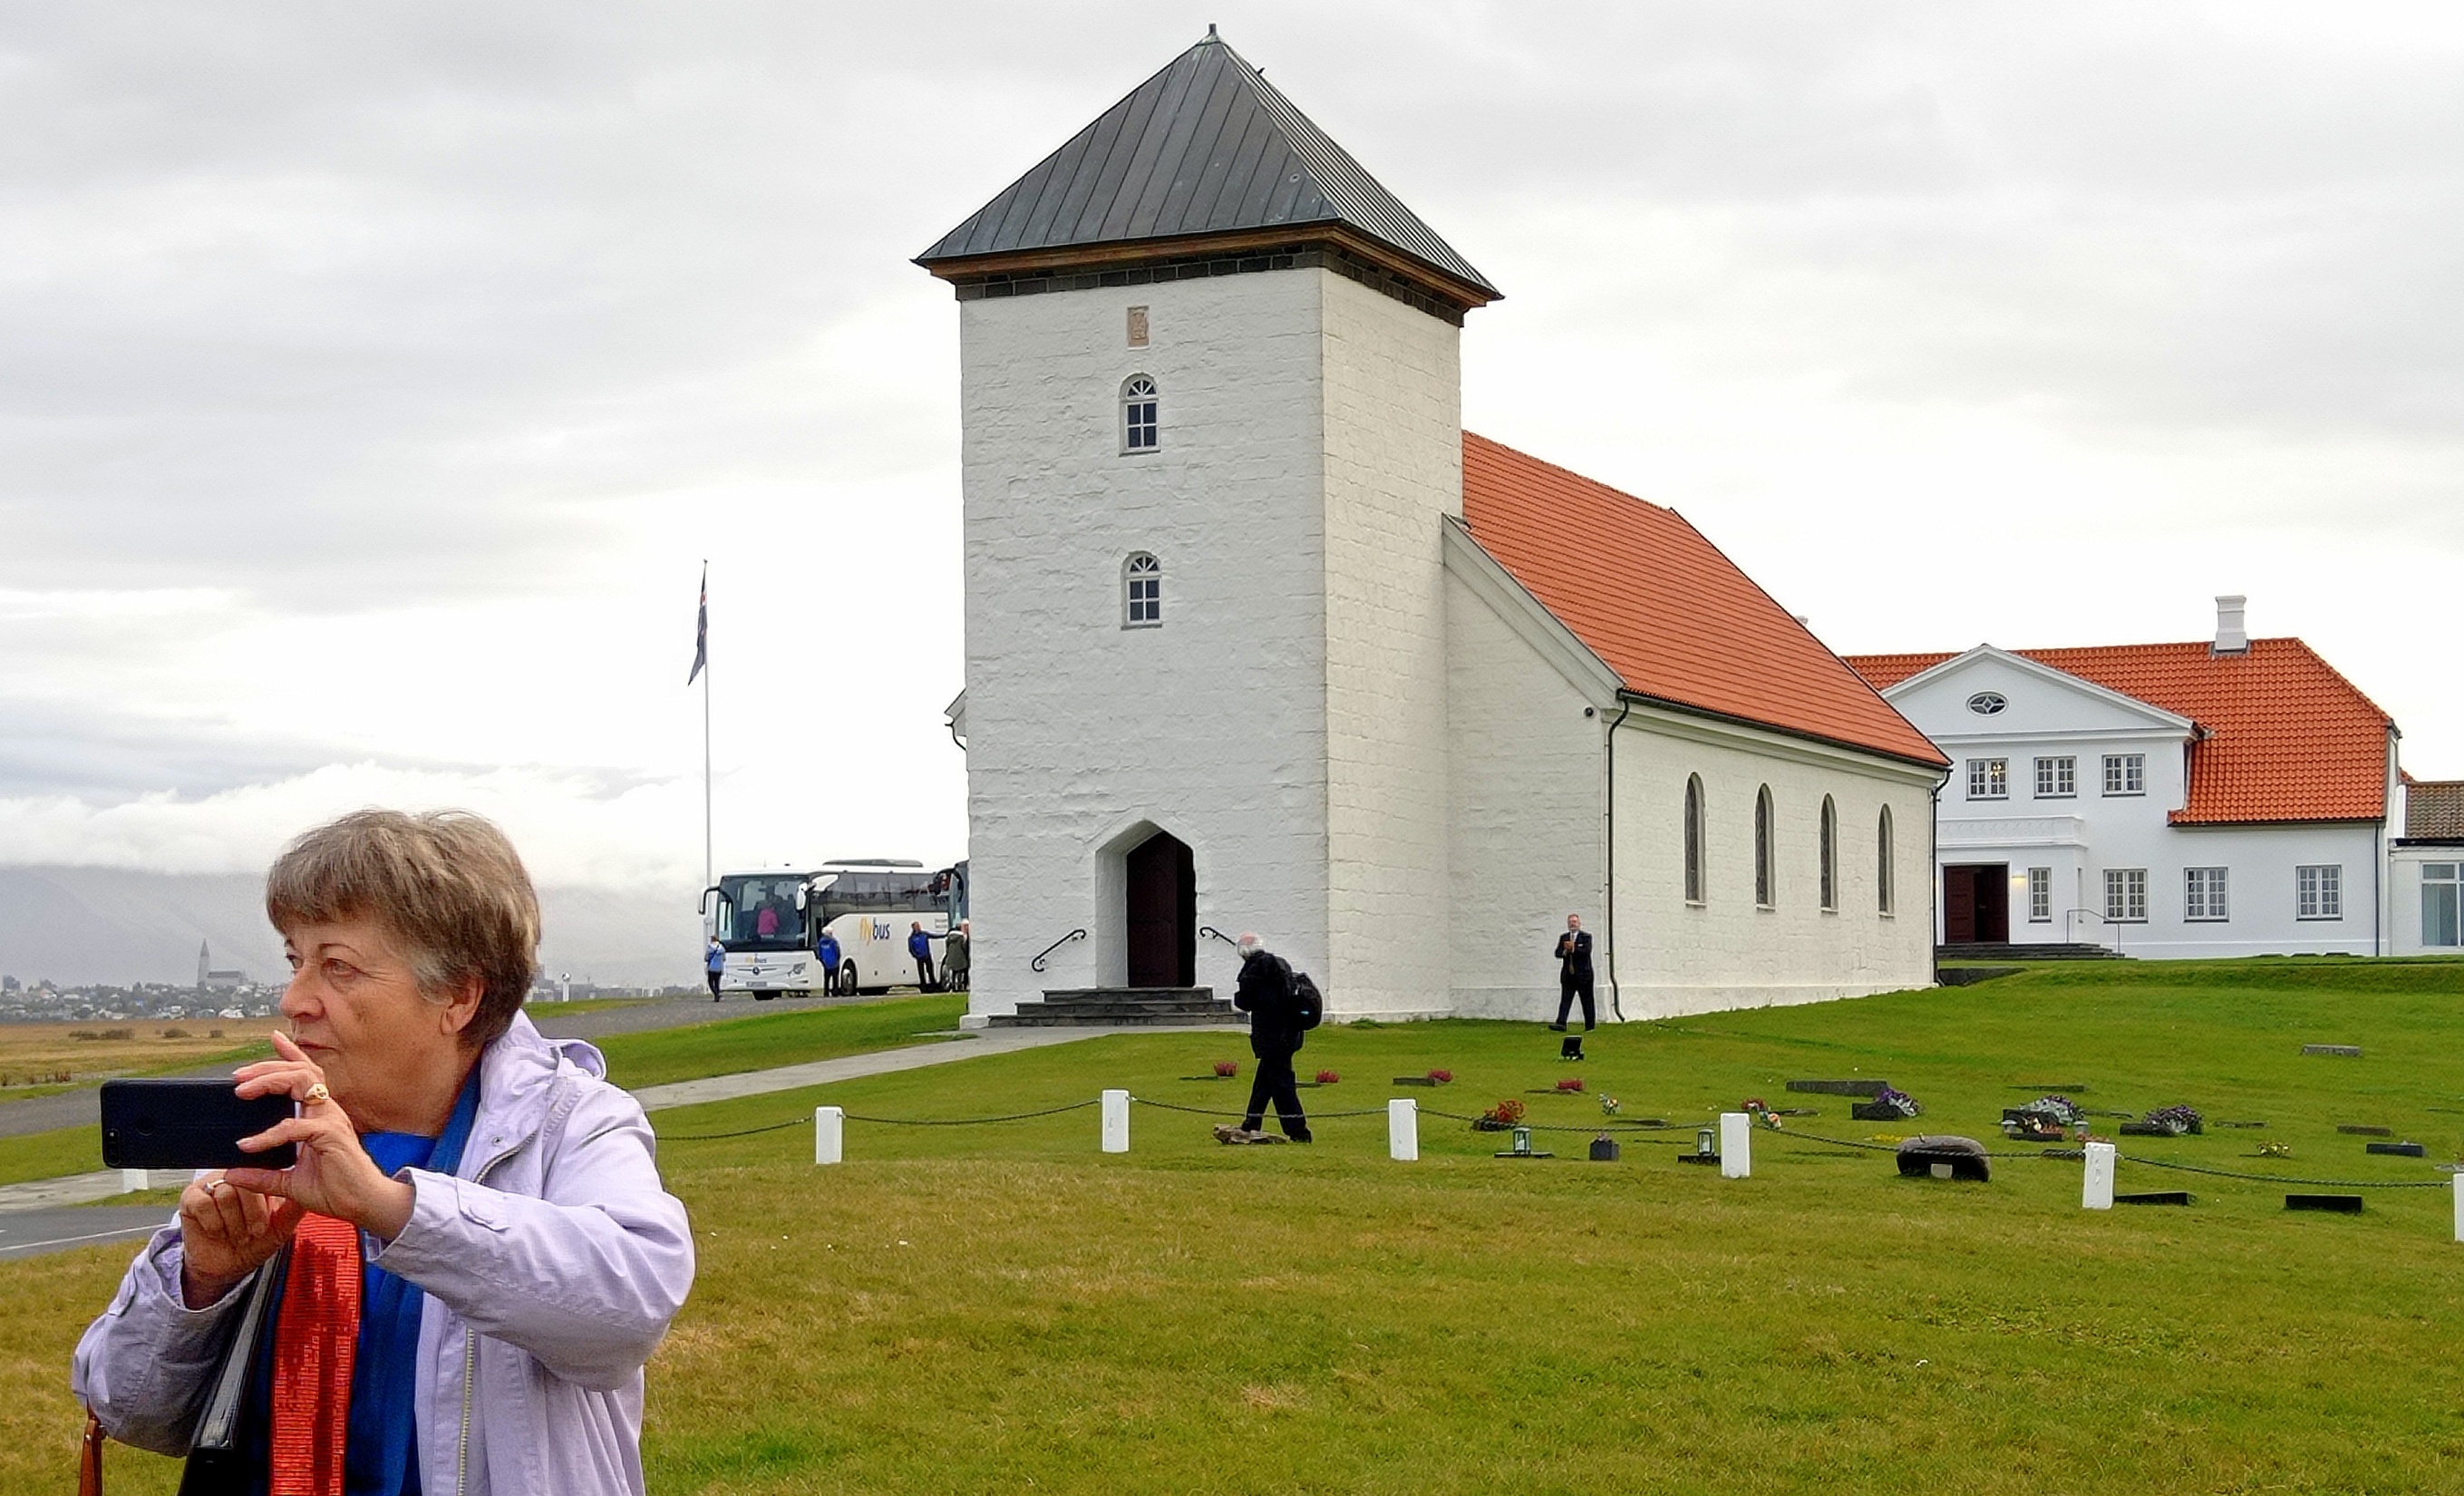  Bessastaðir, templom és elnöki rezidencia